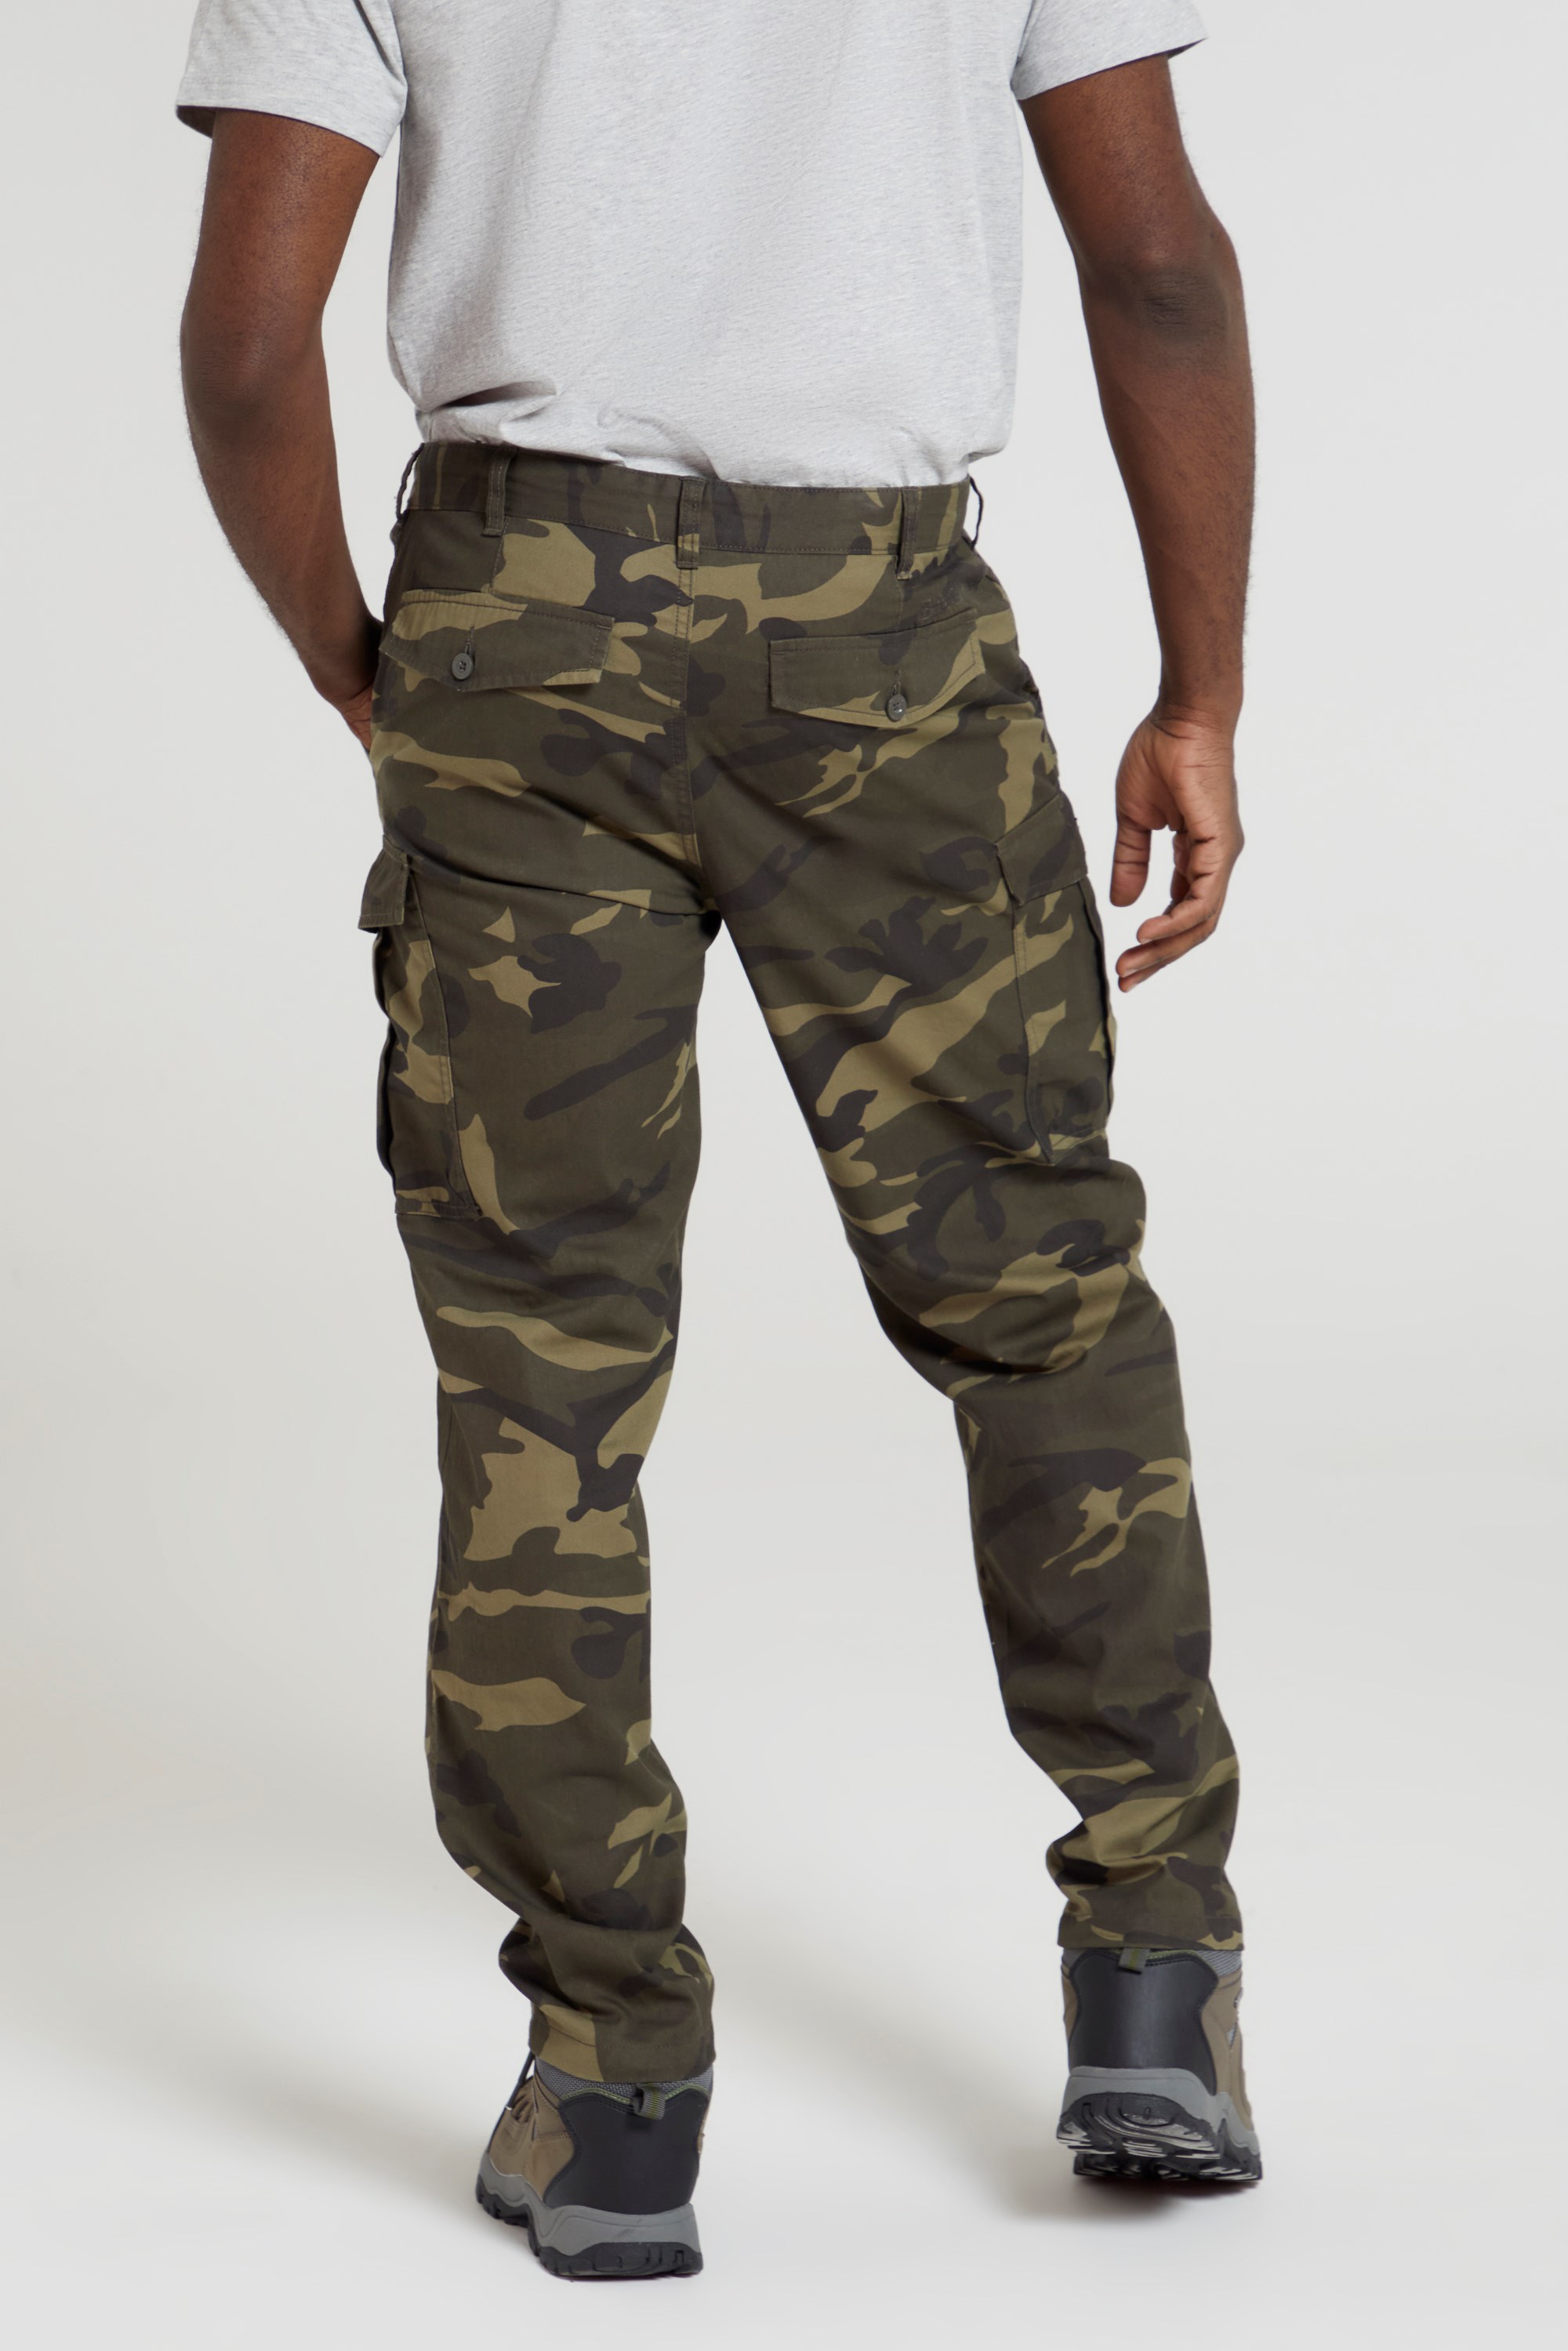 US Army Cargo Pants for Men - Poshmark-mncb.edu.vn